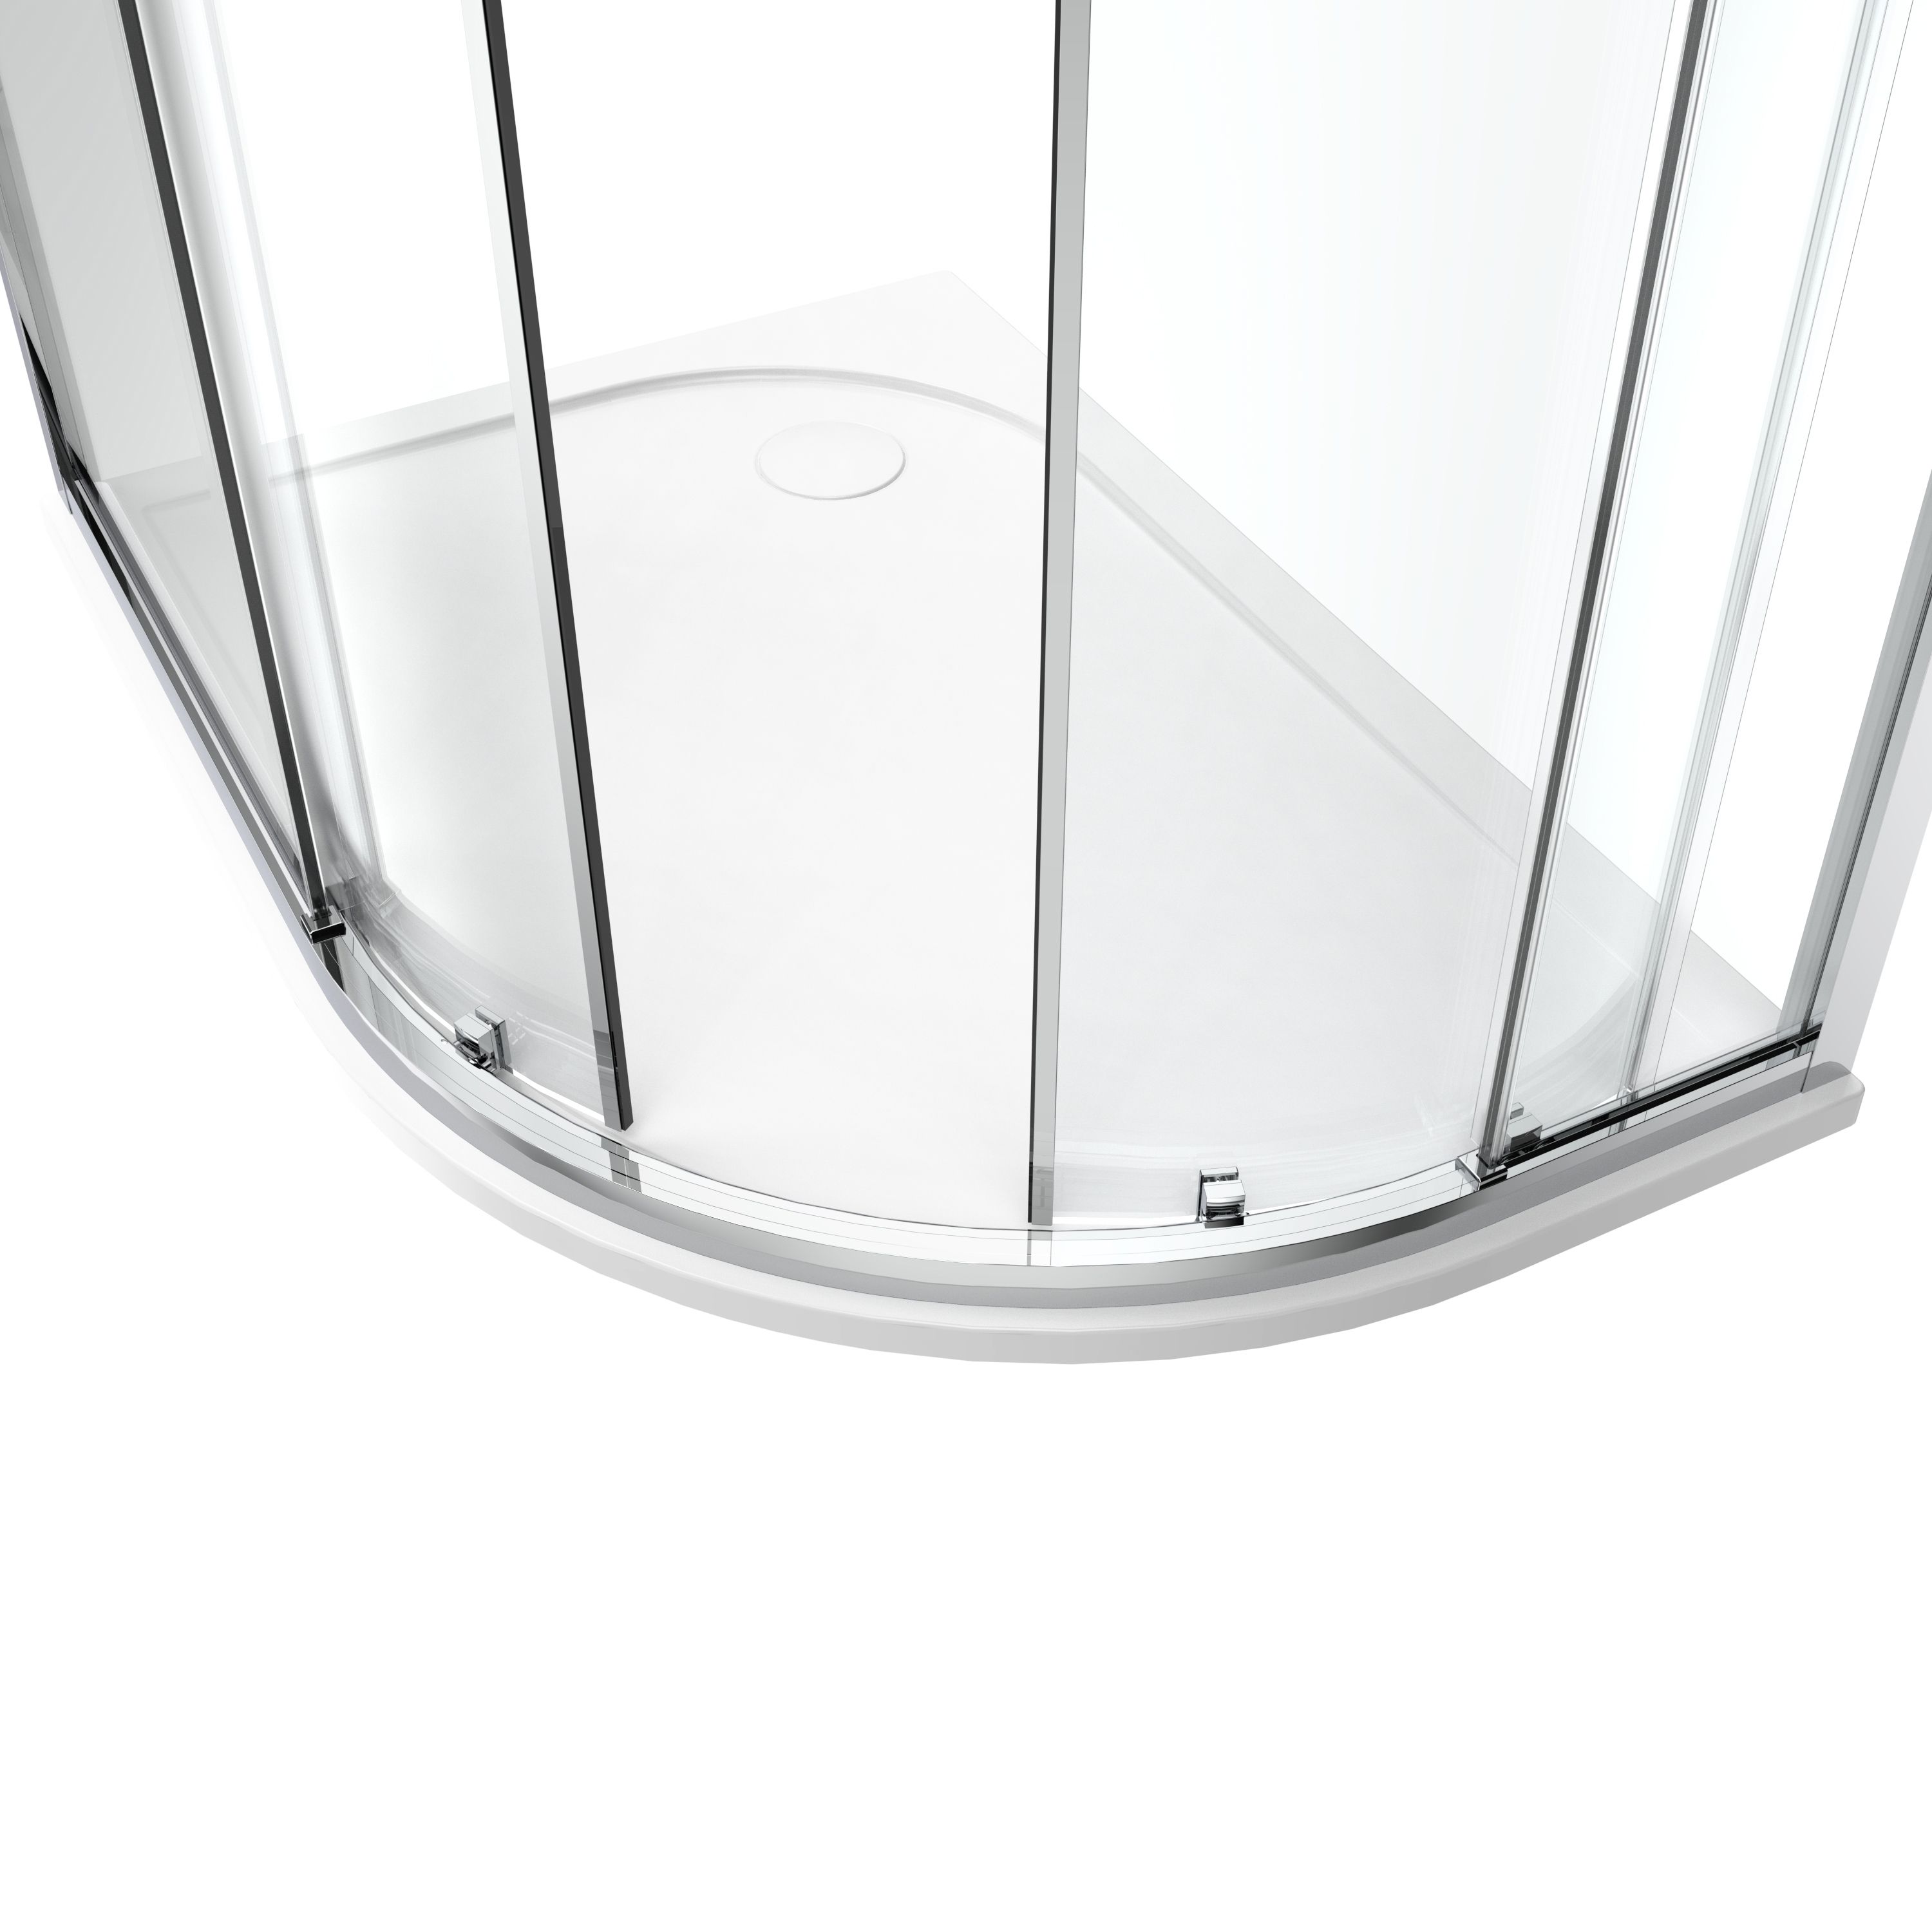 GoodHome Ledava Chrome effect Left-handed Offset quadrant Shower Enclosure & tray - Corner entry double sliding door (H)195cm (W)90cm (D)100cm